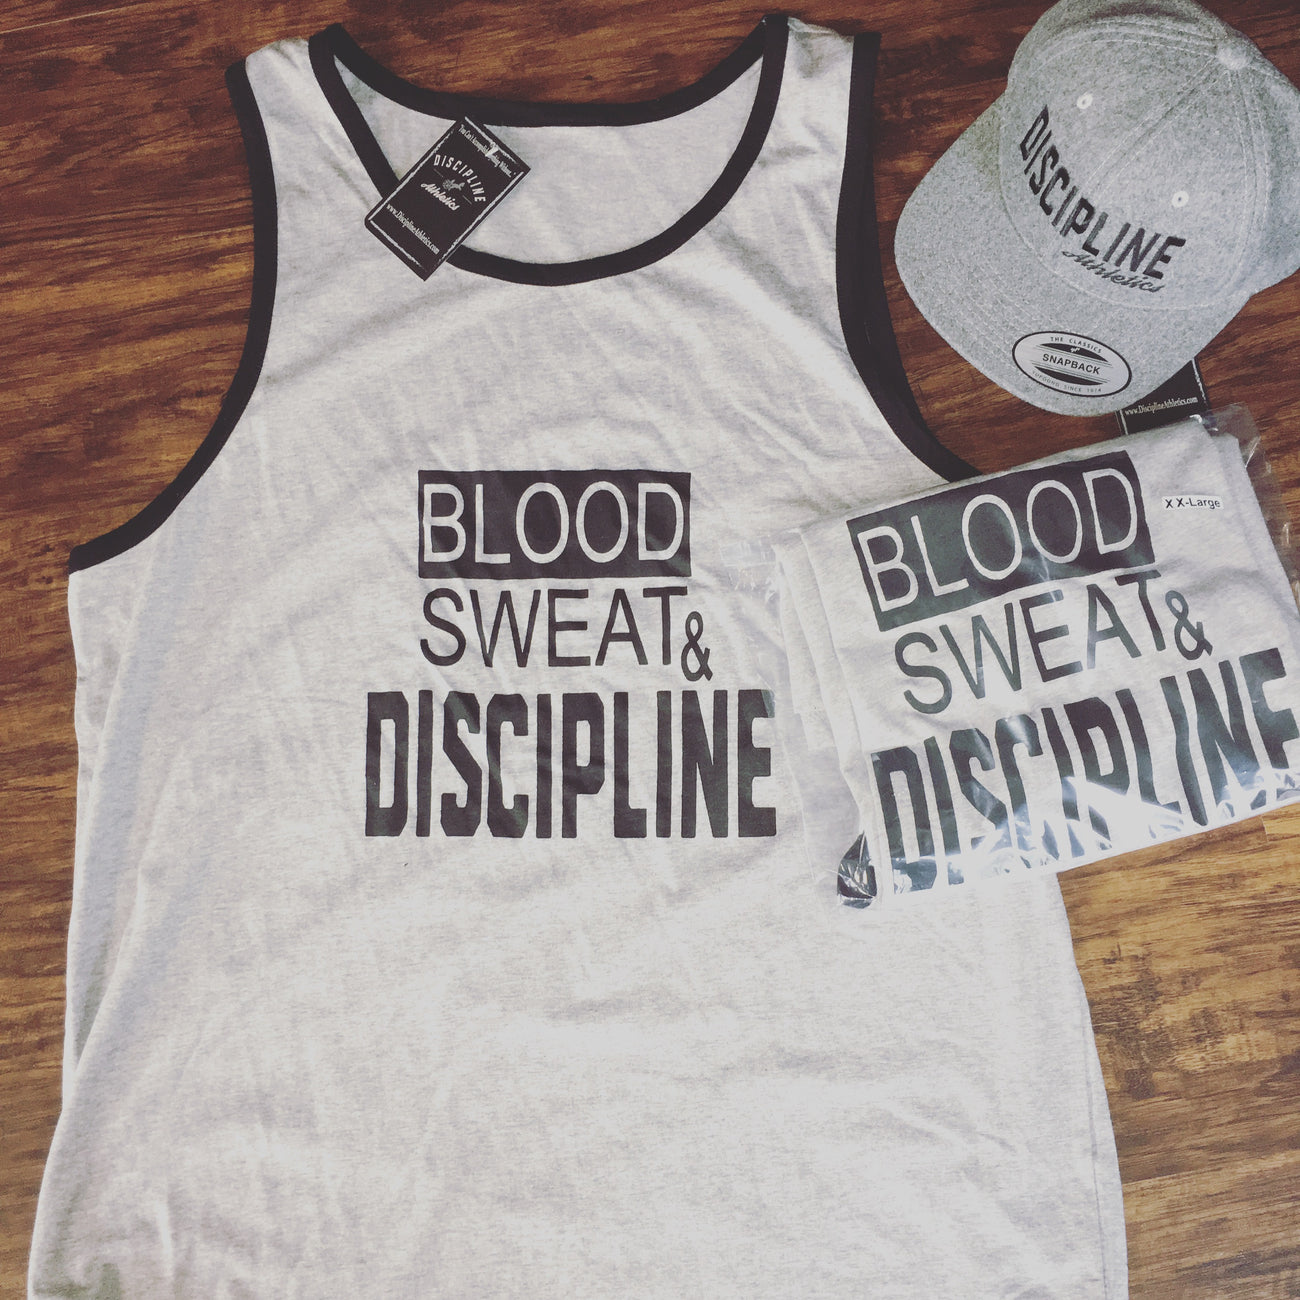 "Blood Sweat & Discipline" tank top